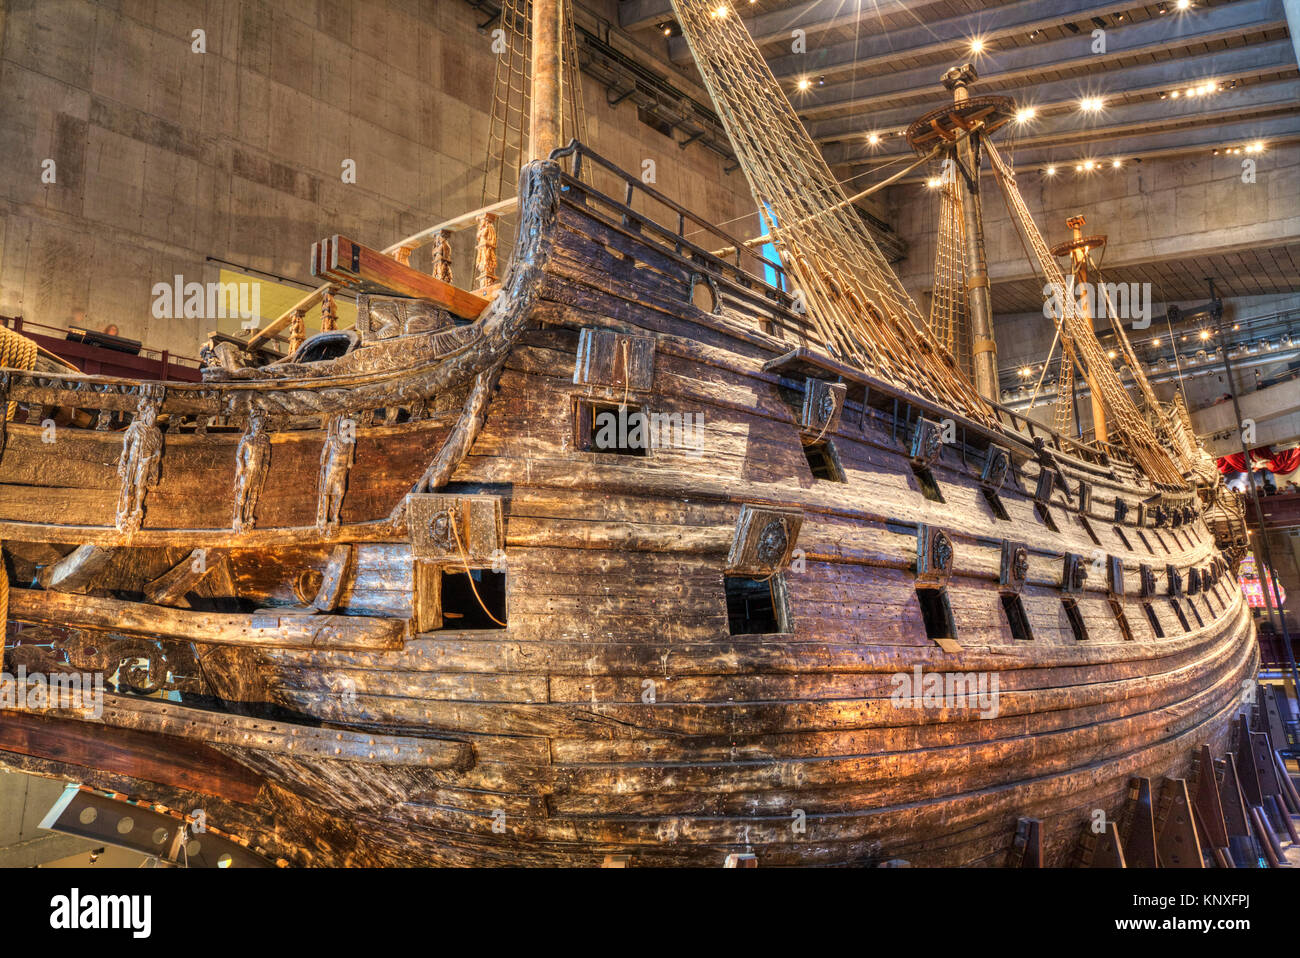 17th Century Warship, Vasa Maritime Museum (Vasamseet), Djurgarden Island, Stockholm, Sweden Stock Photo